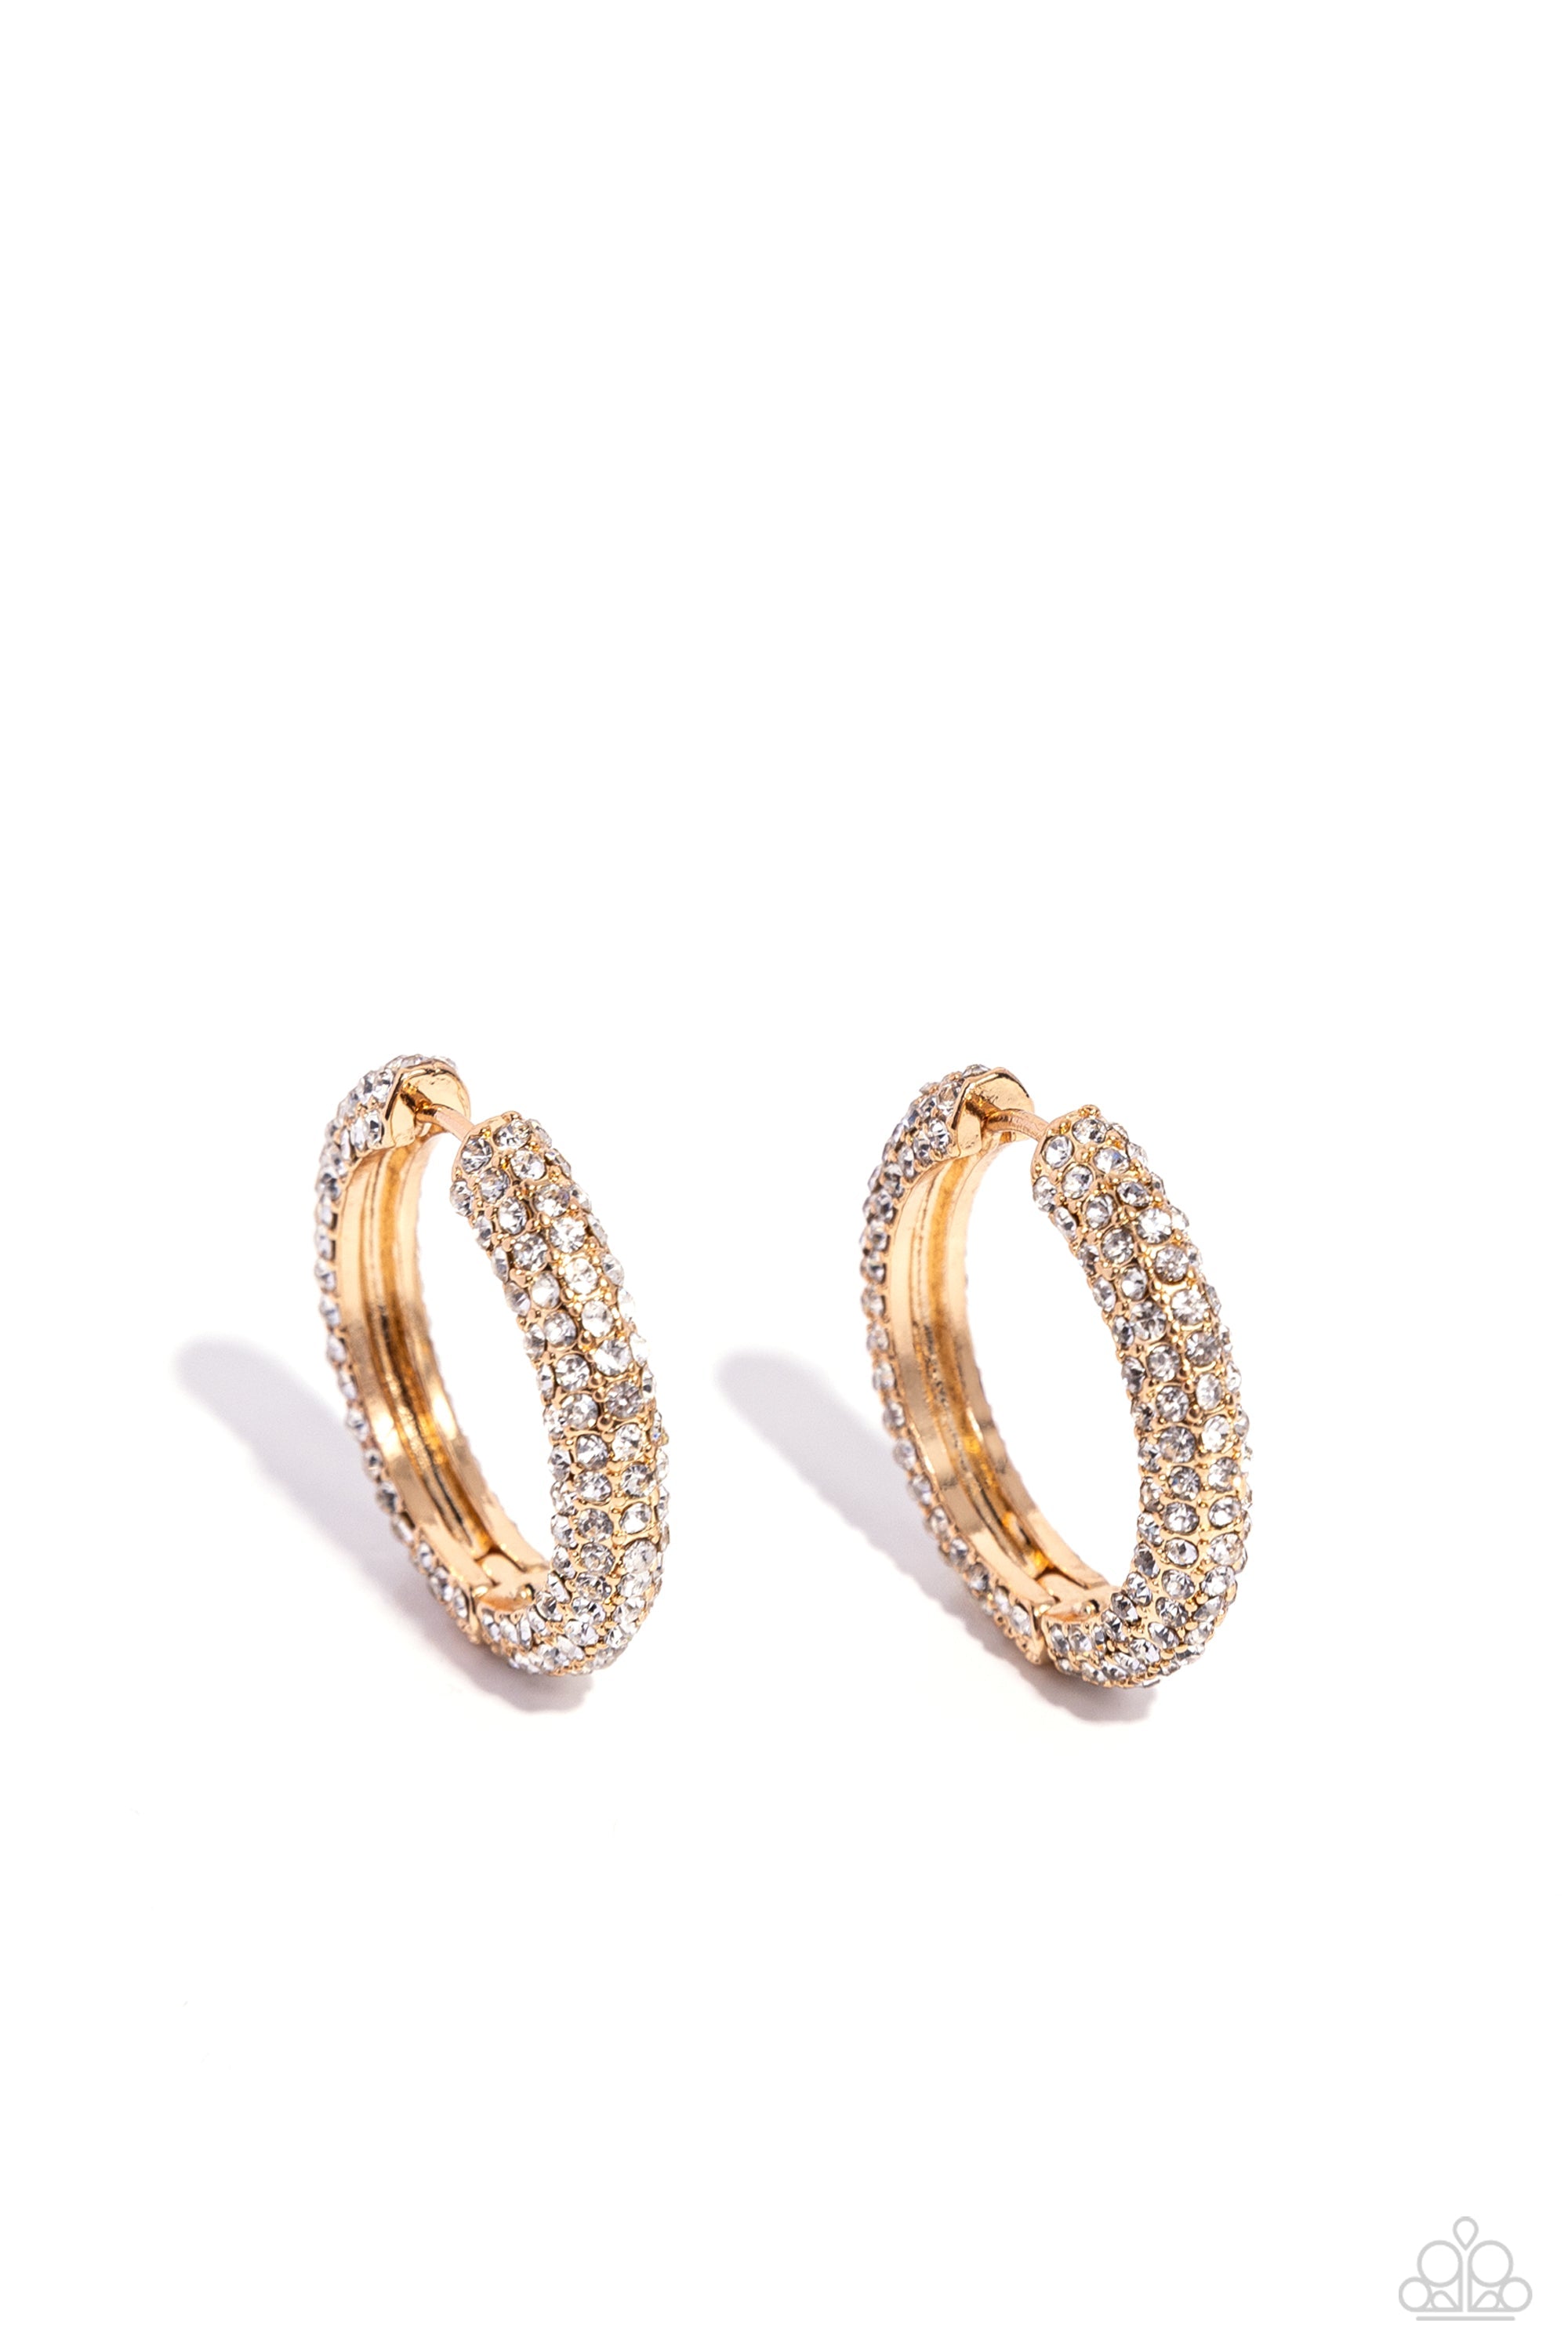 Glowing Praise Gold & White Rhinestone Hoop Earrings - Paparazzi Accessories- lightbox - CarasShop.com - $5 Jewelry by Cara Jewels